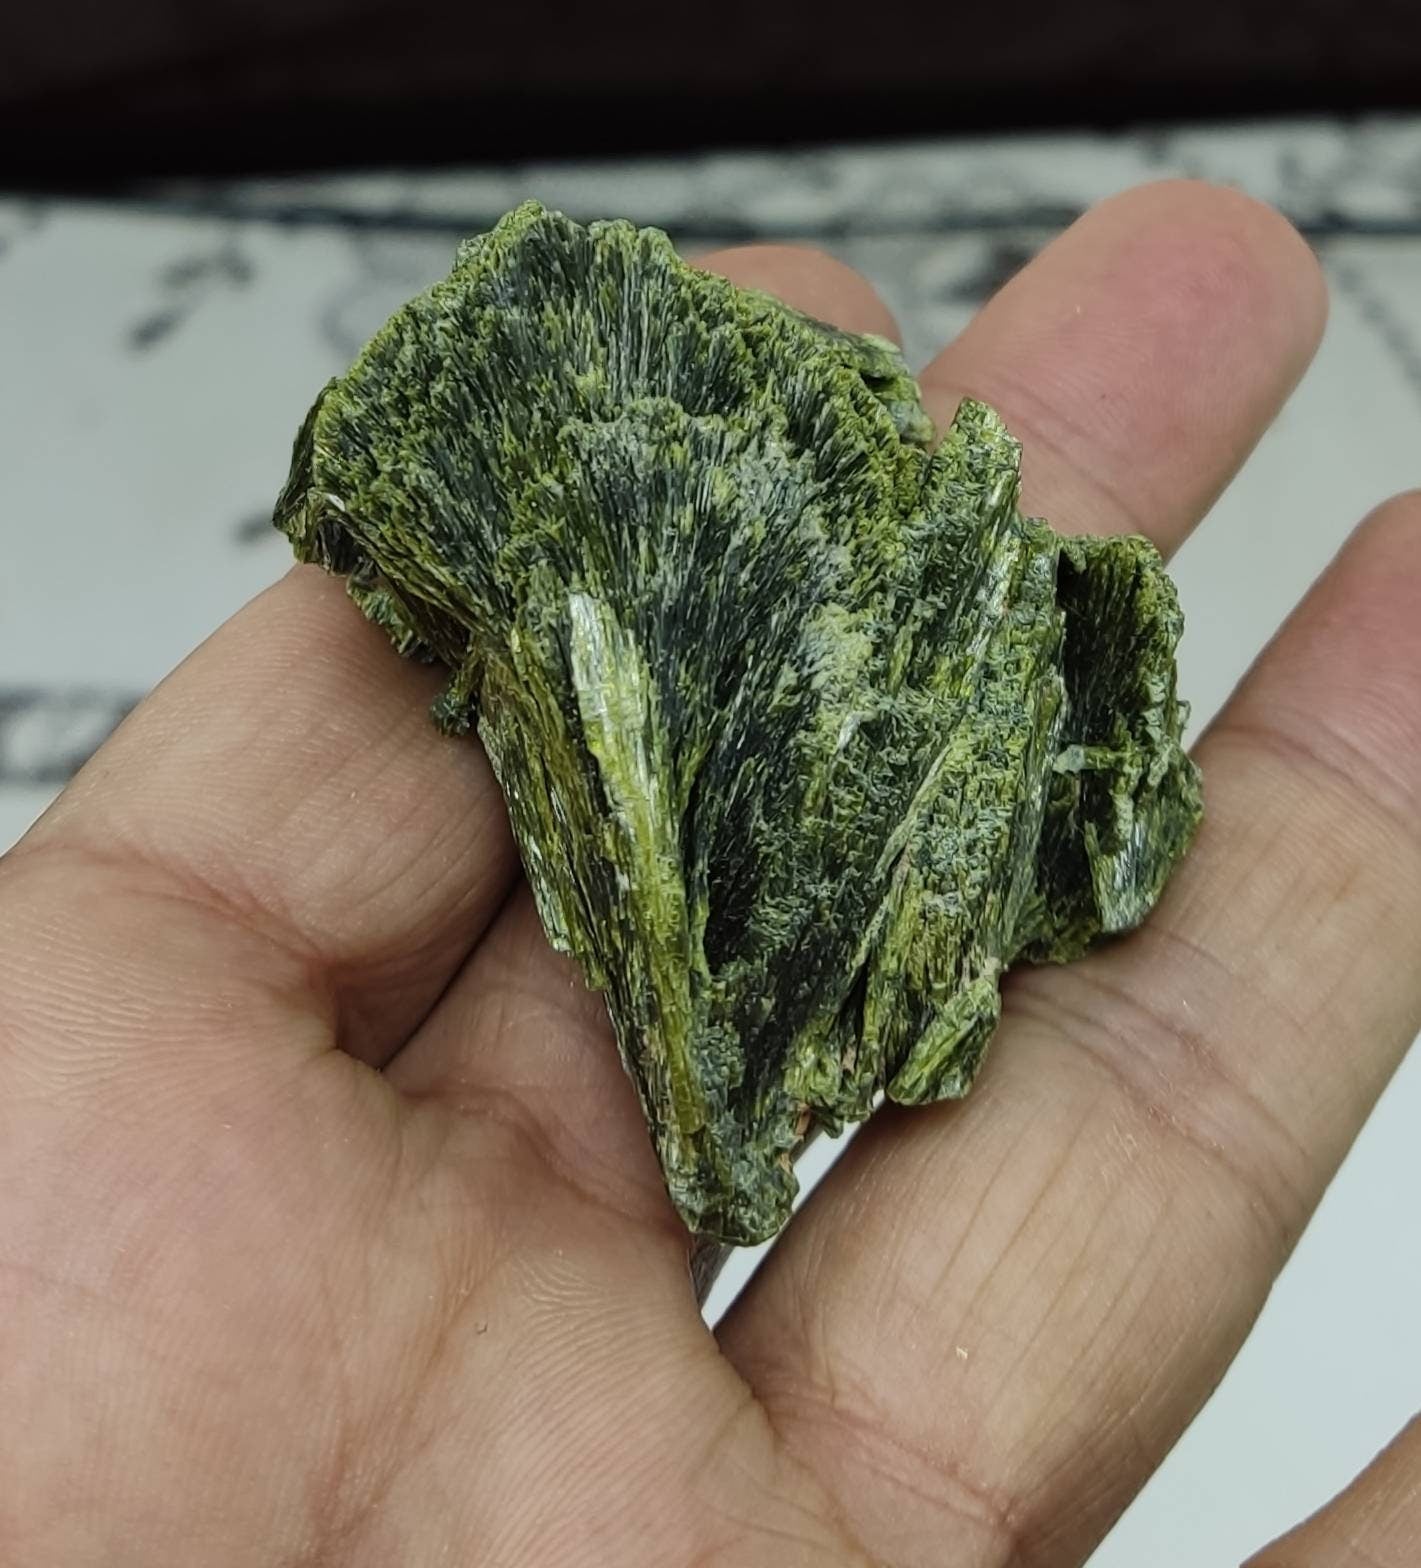 Crystal specimen of Epidote 75 grams